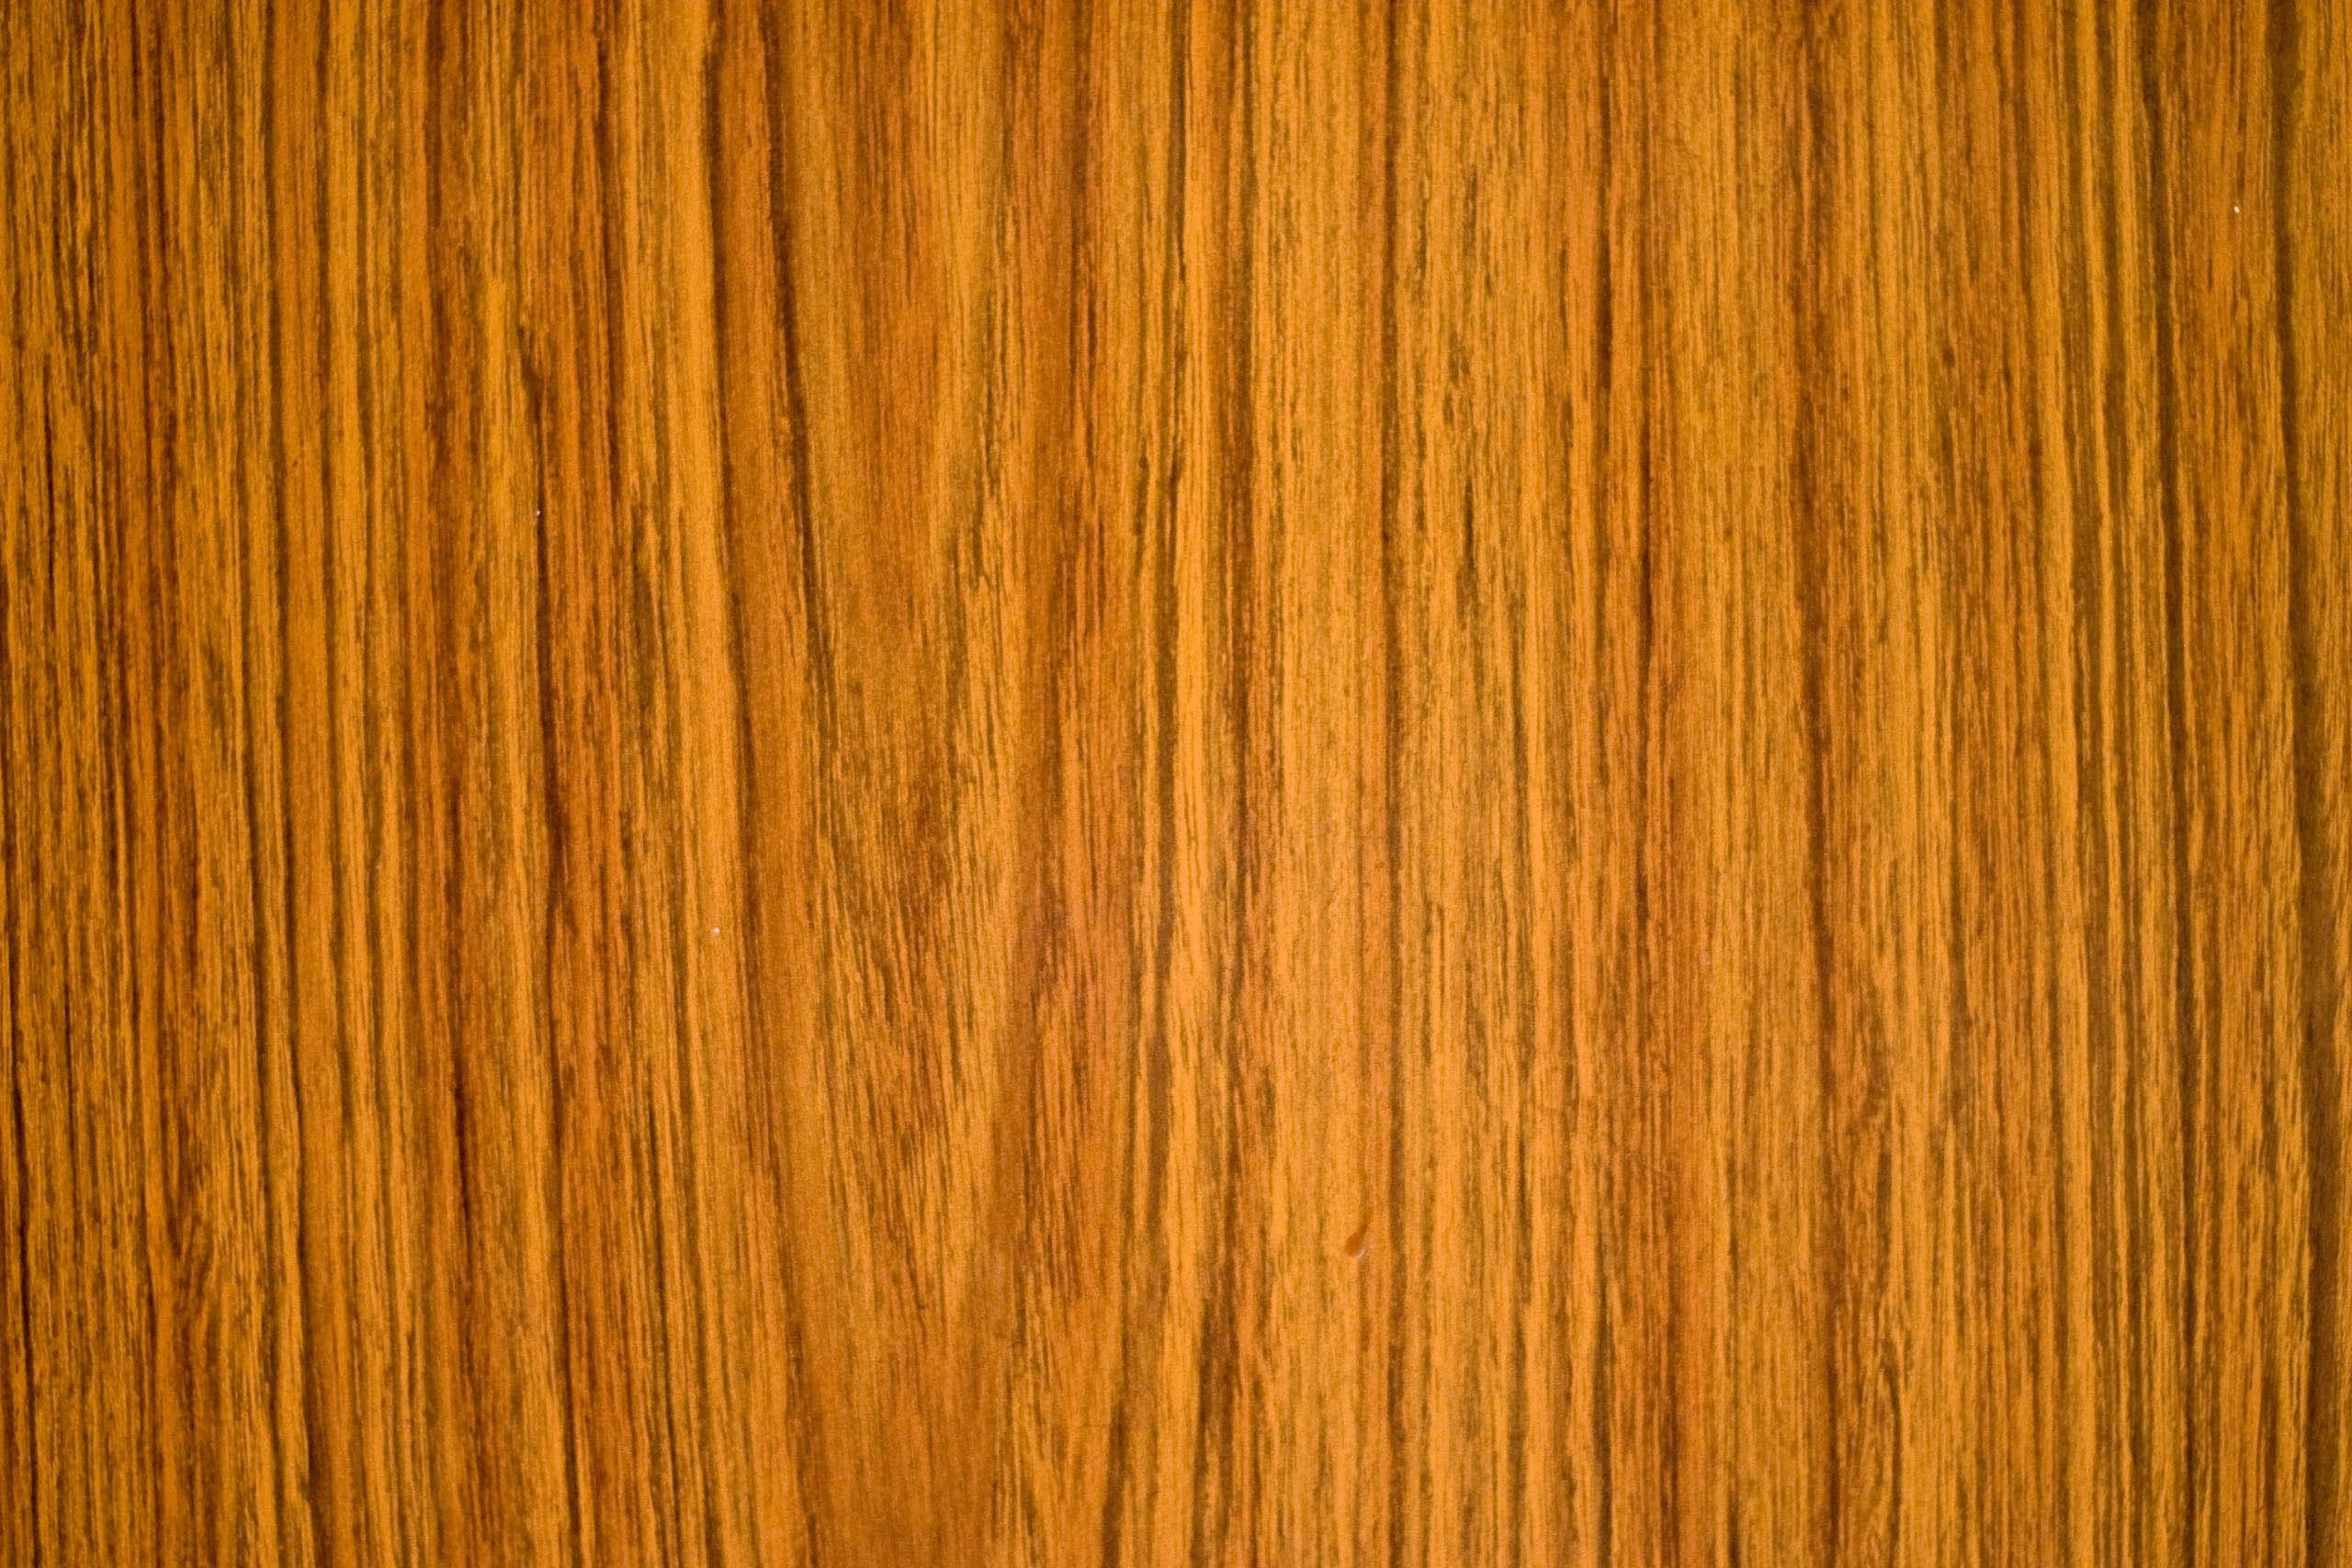 2560x1707 wood grain wallpaper hd